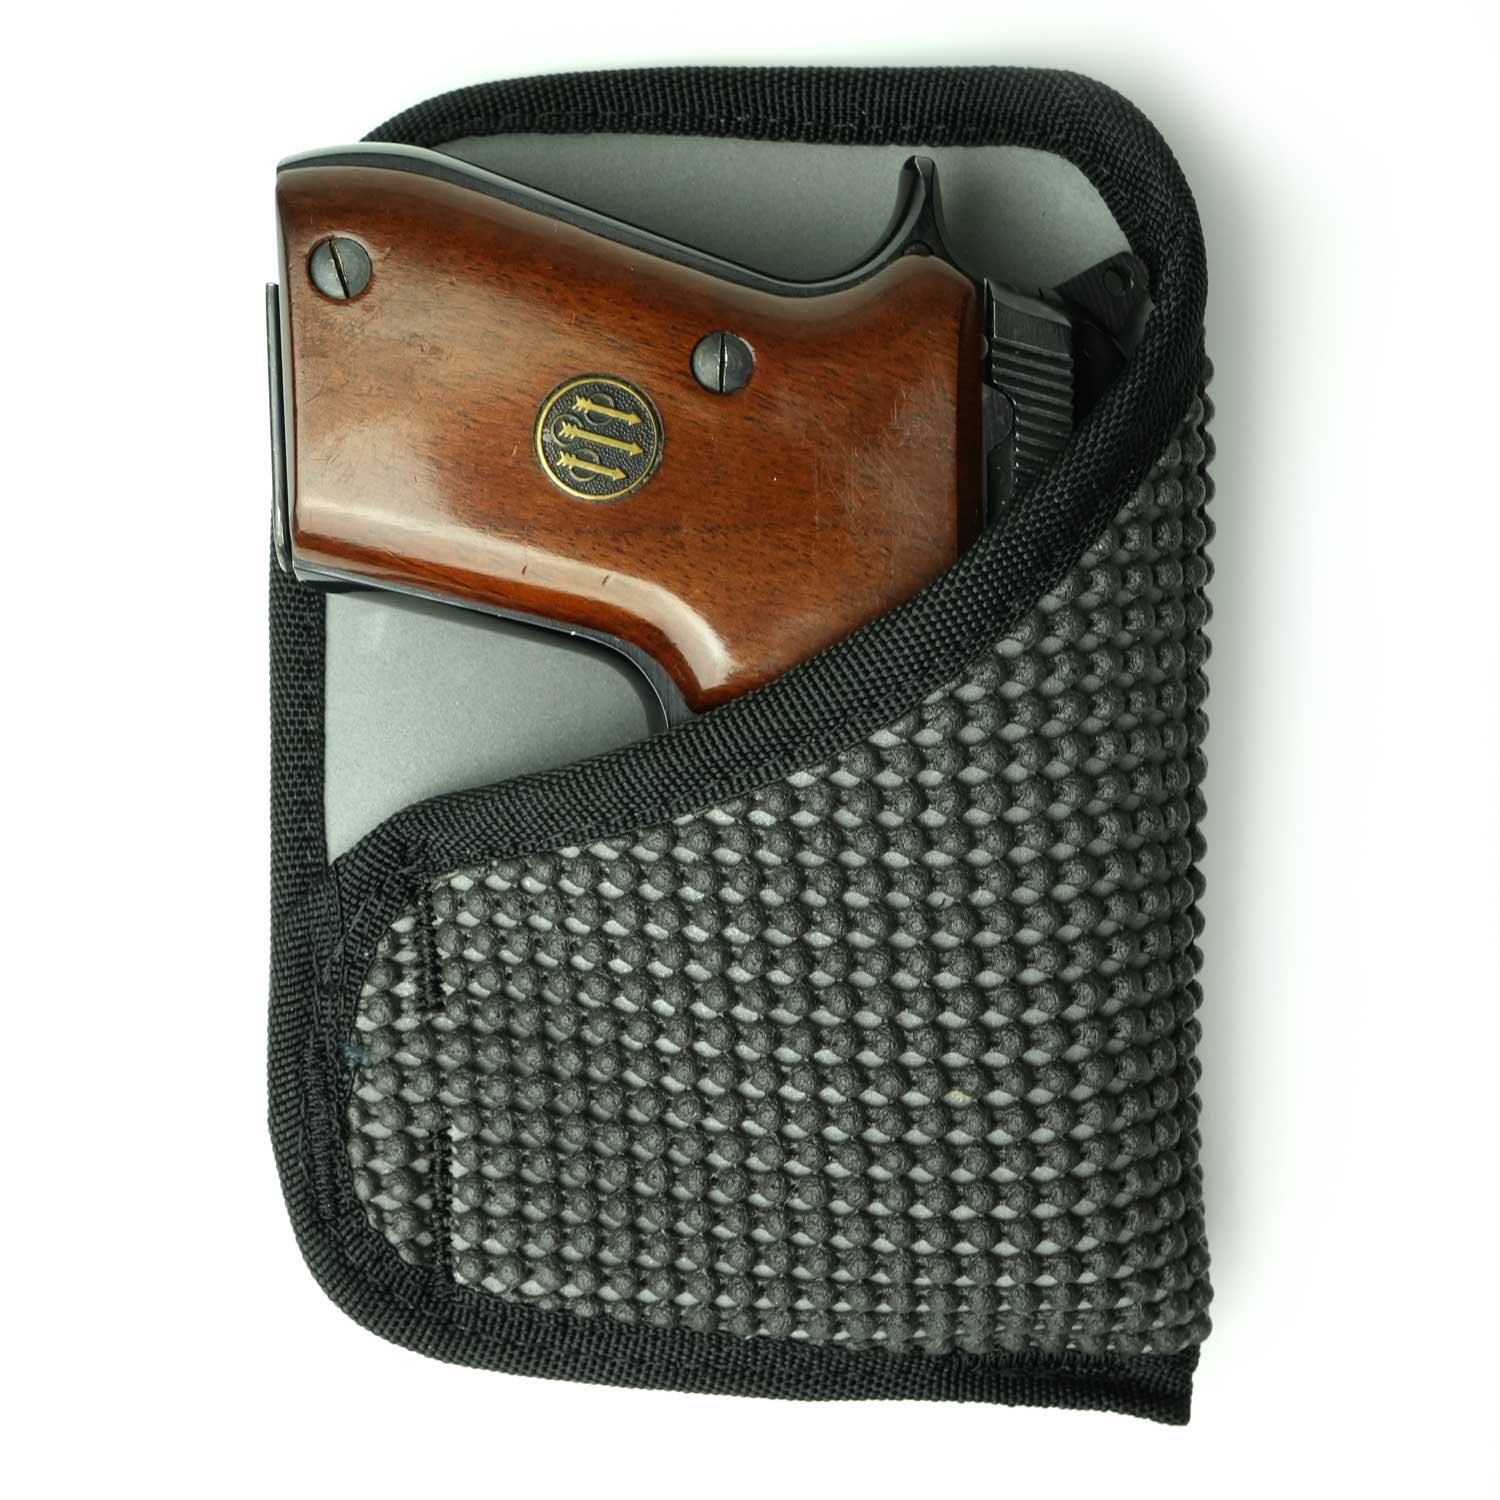 wallet holster pocket holsters concealed carry rear pants pocket holster ruger lcp sig p365 21 12